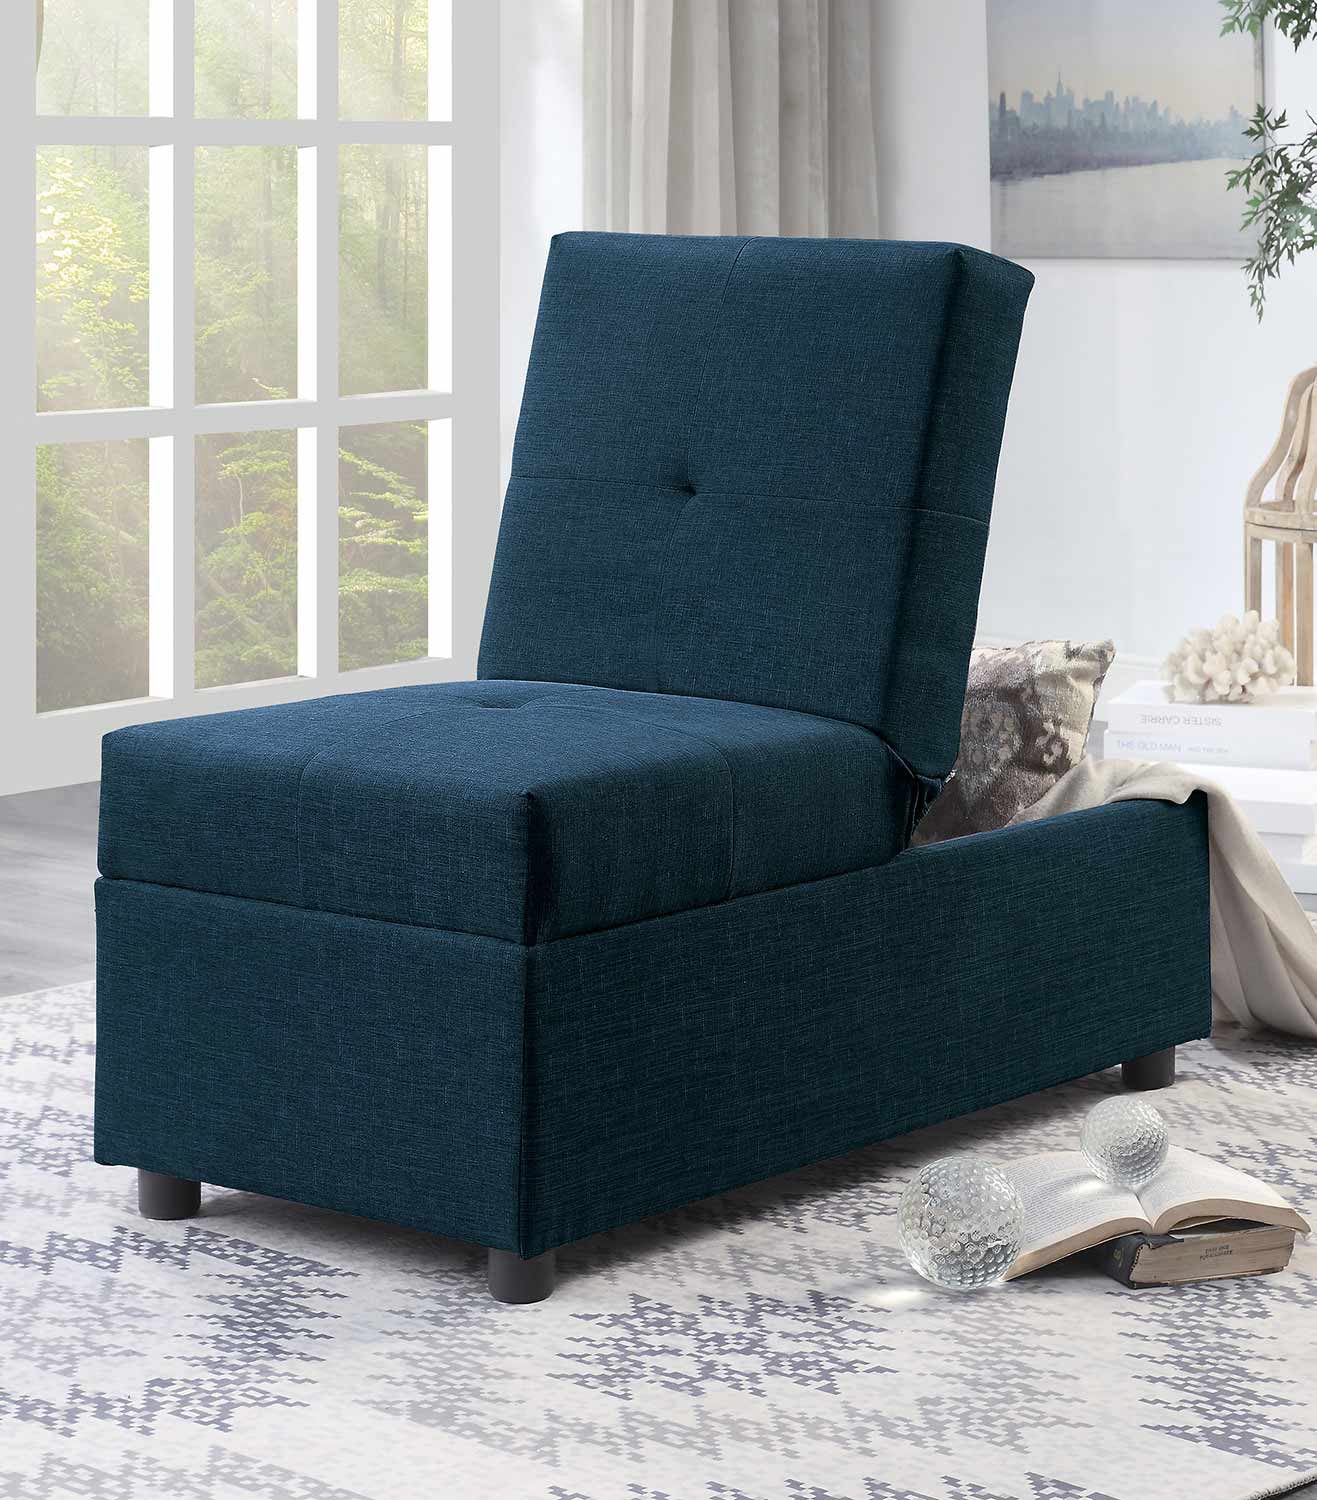 Homelegance Denby Storage Ottoman/Chair - Blue